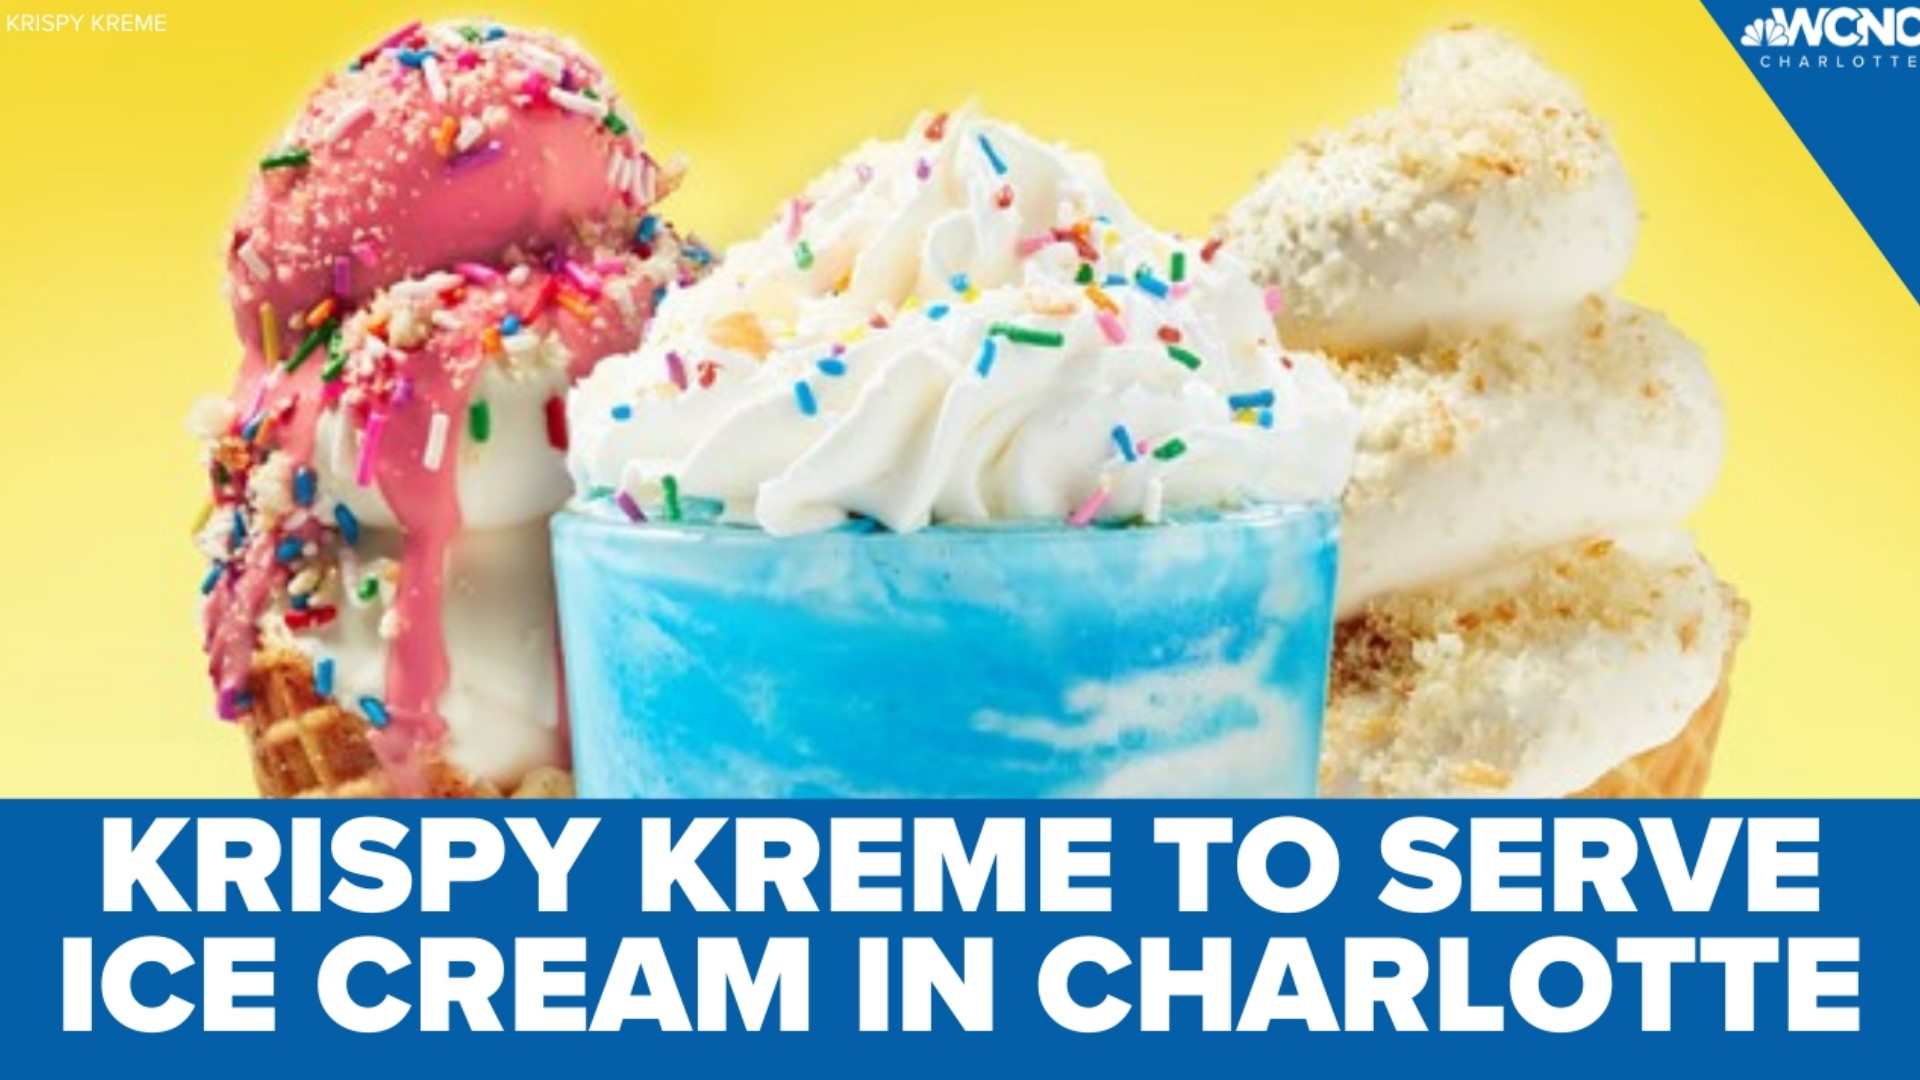 Krispy Kreme is celebrating the start of summer with a new sweet treat.